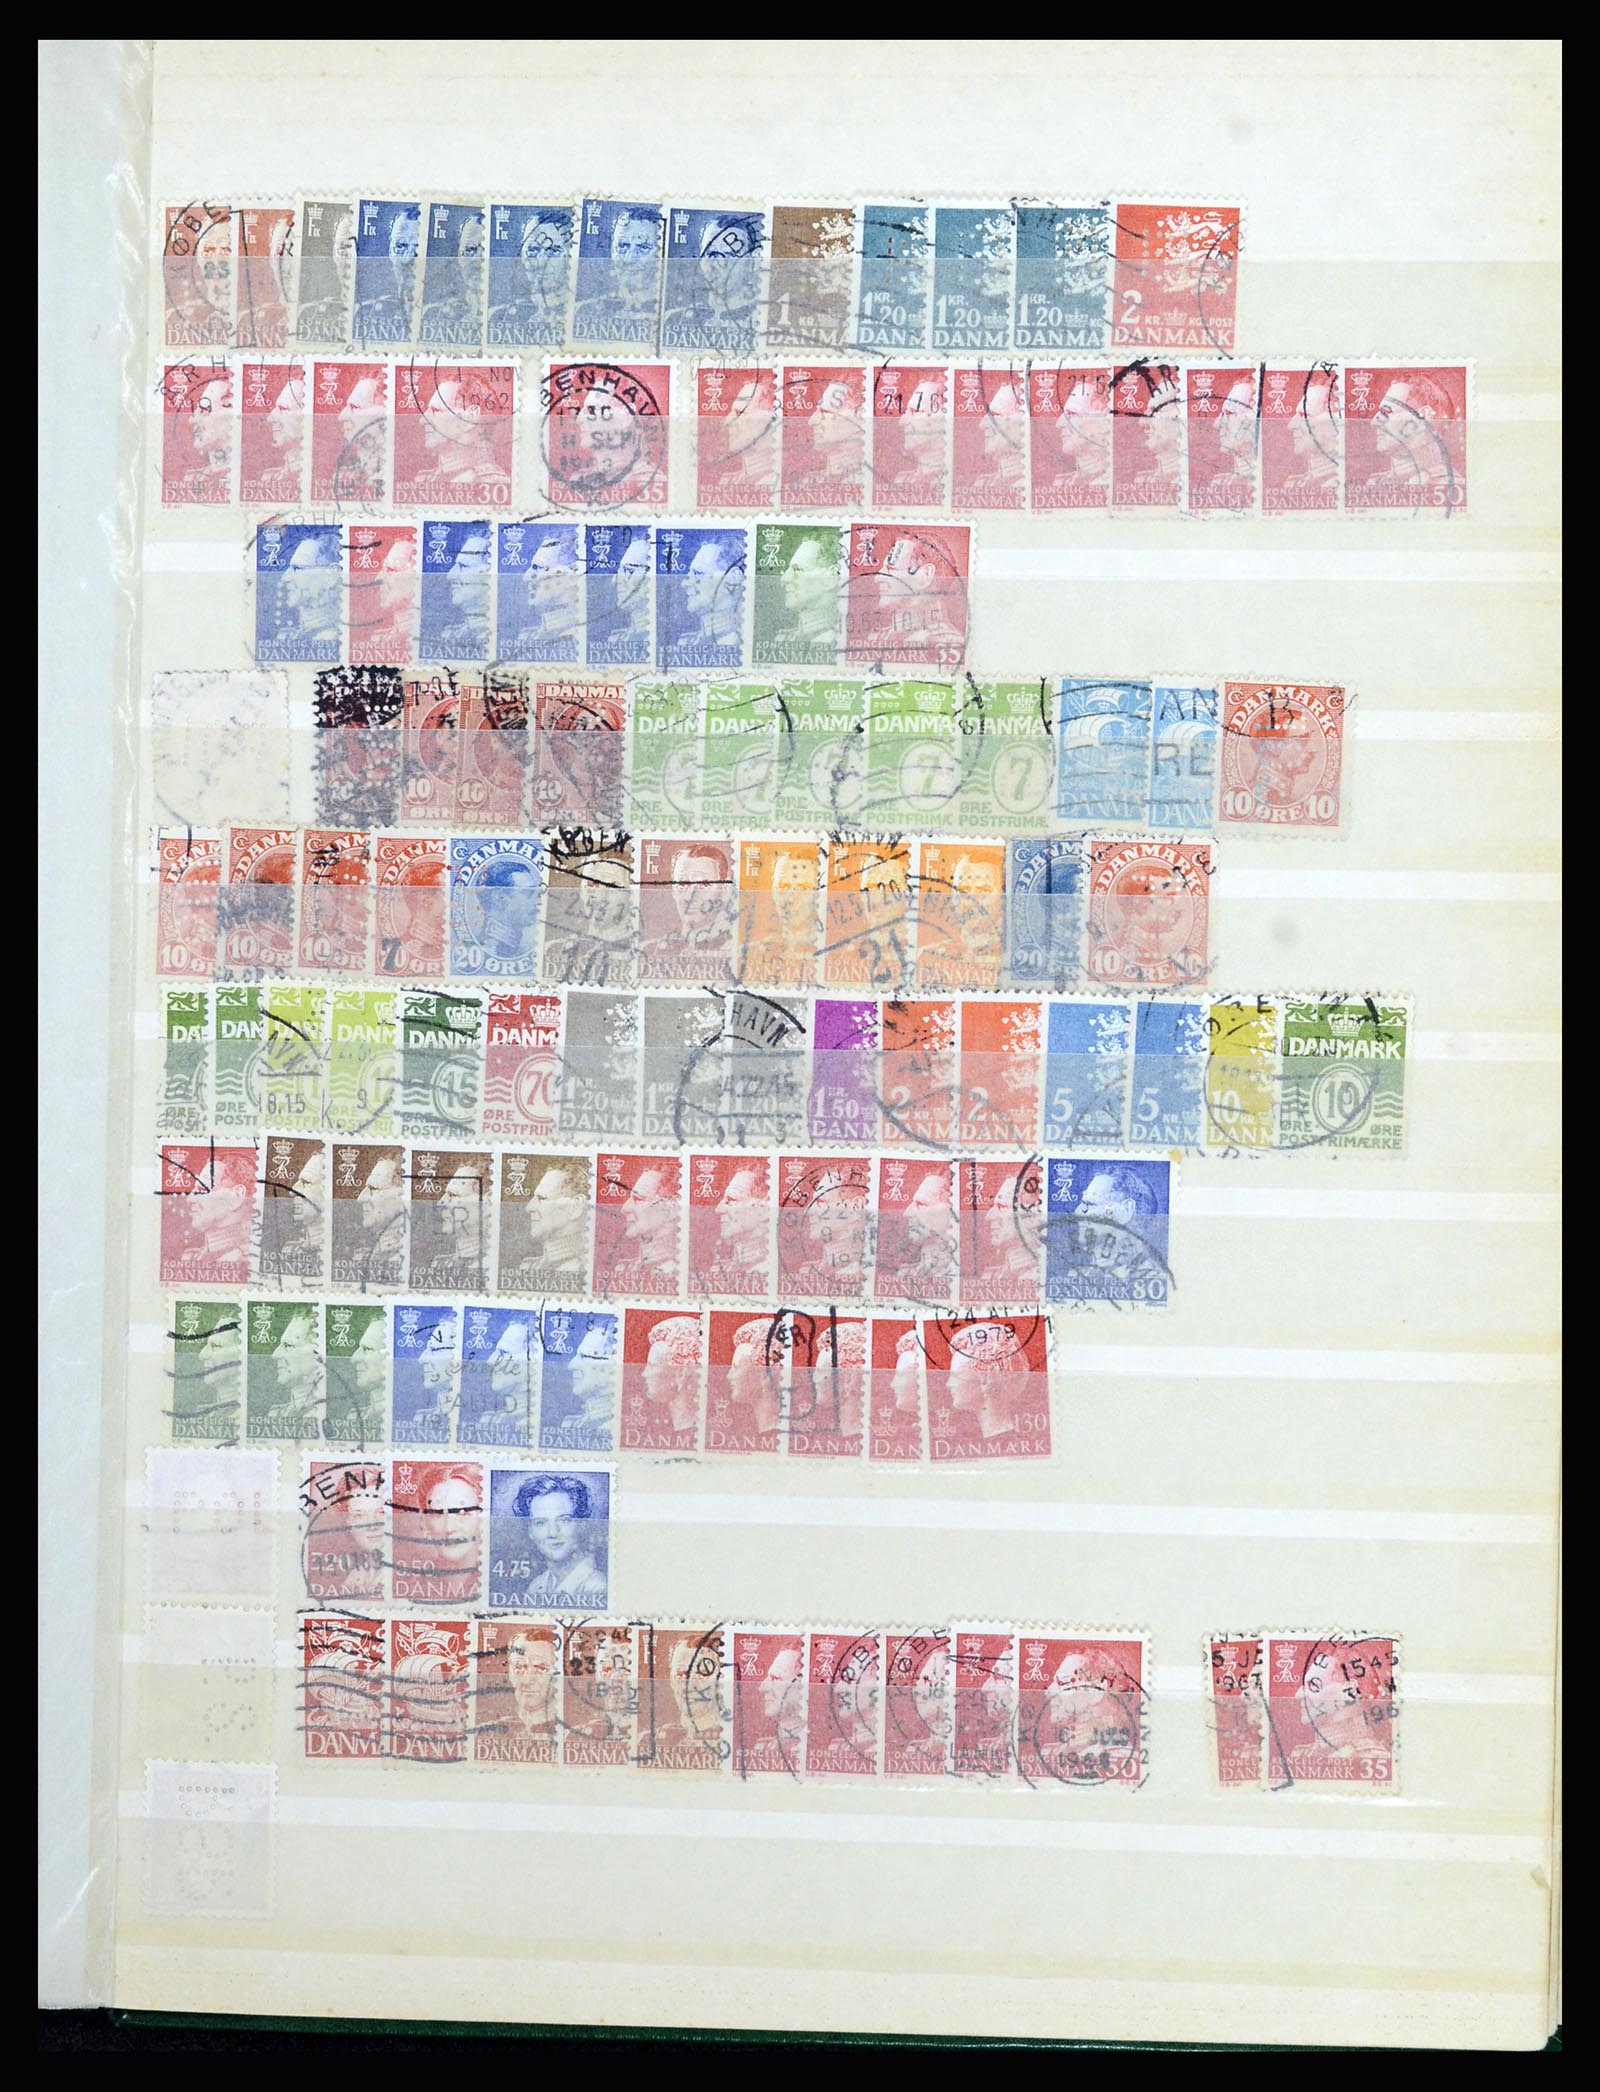 37056 087 - Stamp collection 37056 Denmark perfins.